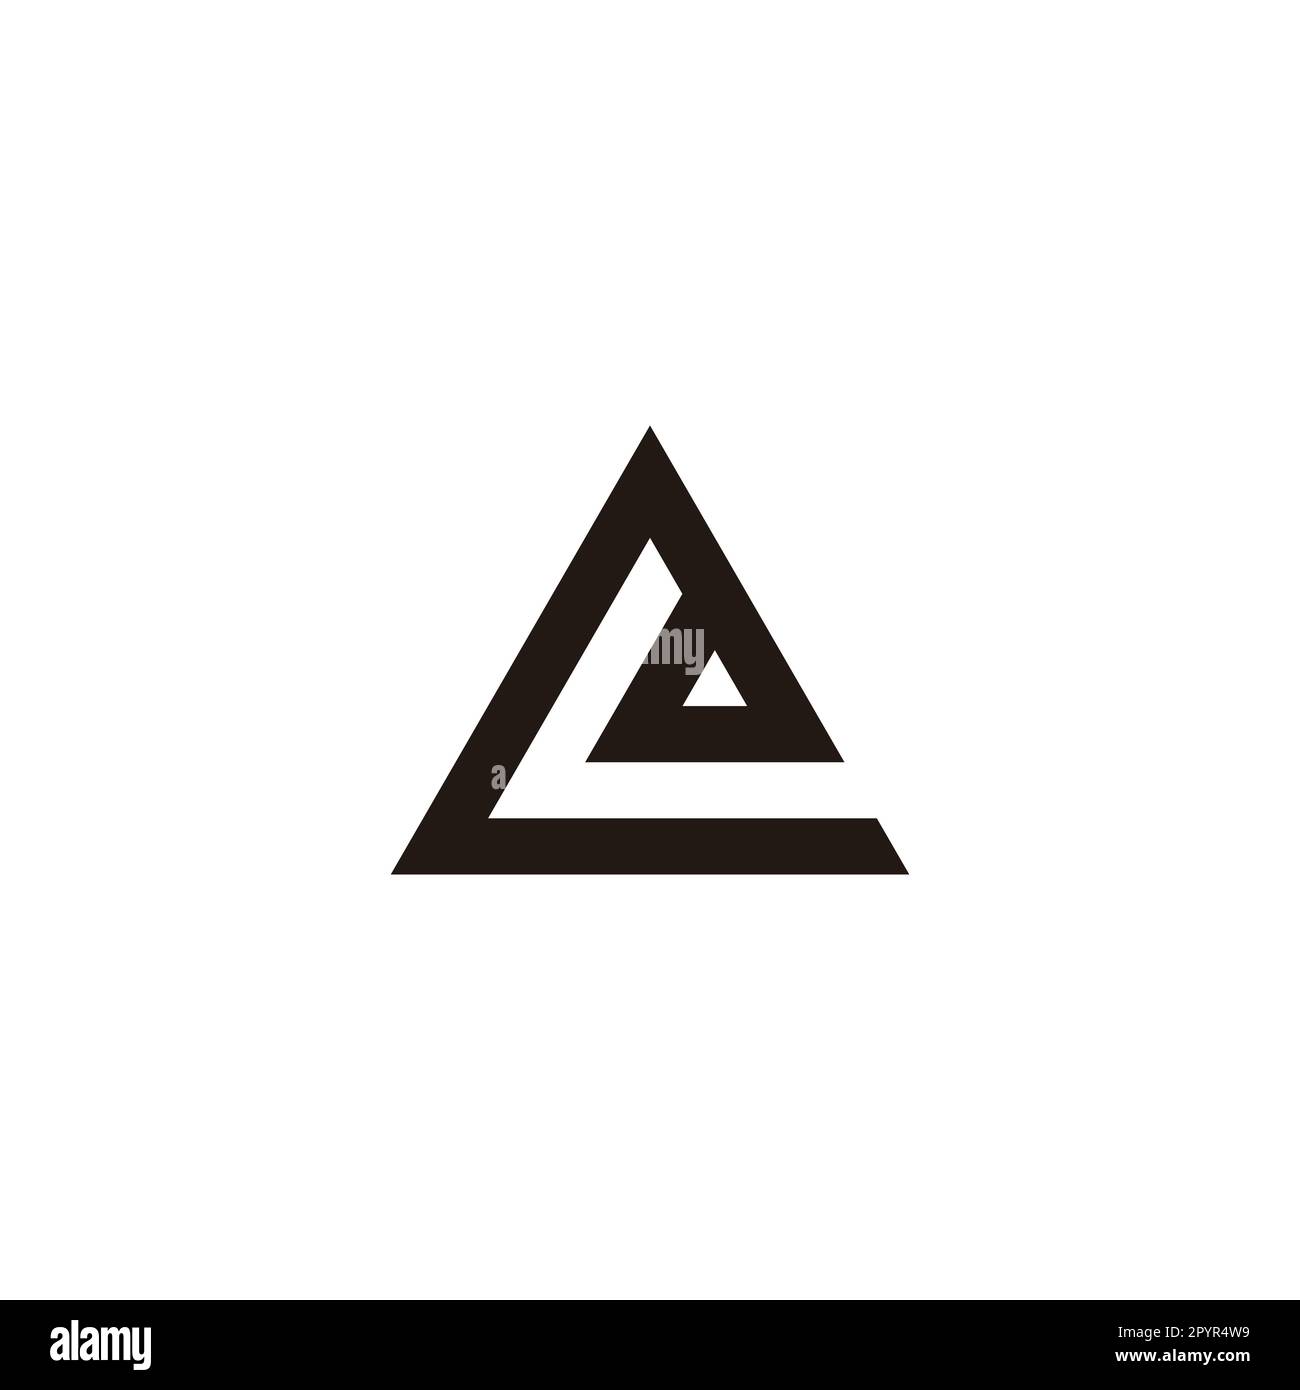 Letter Le triangle geometric symbol simple logo vector Stock Vector ...